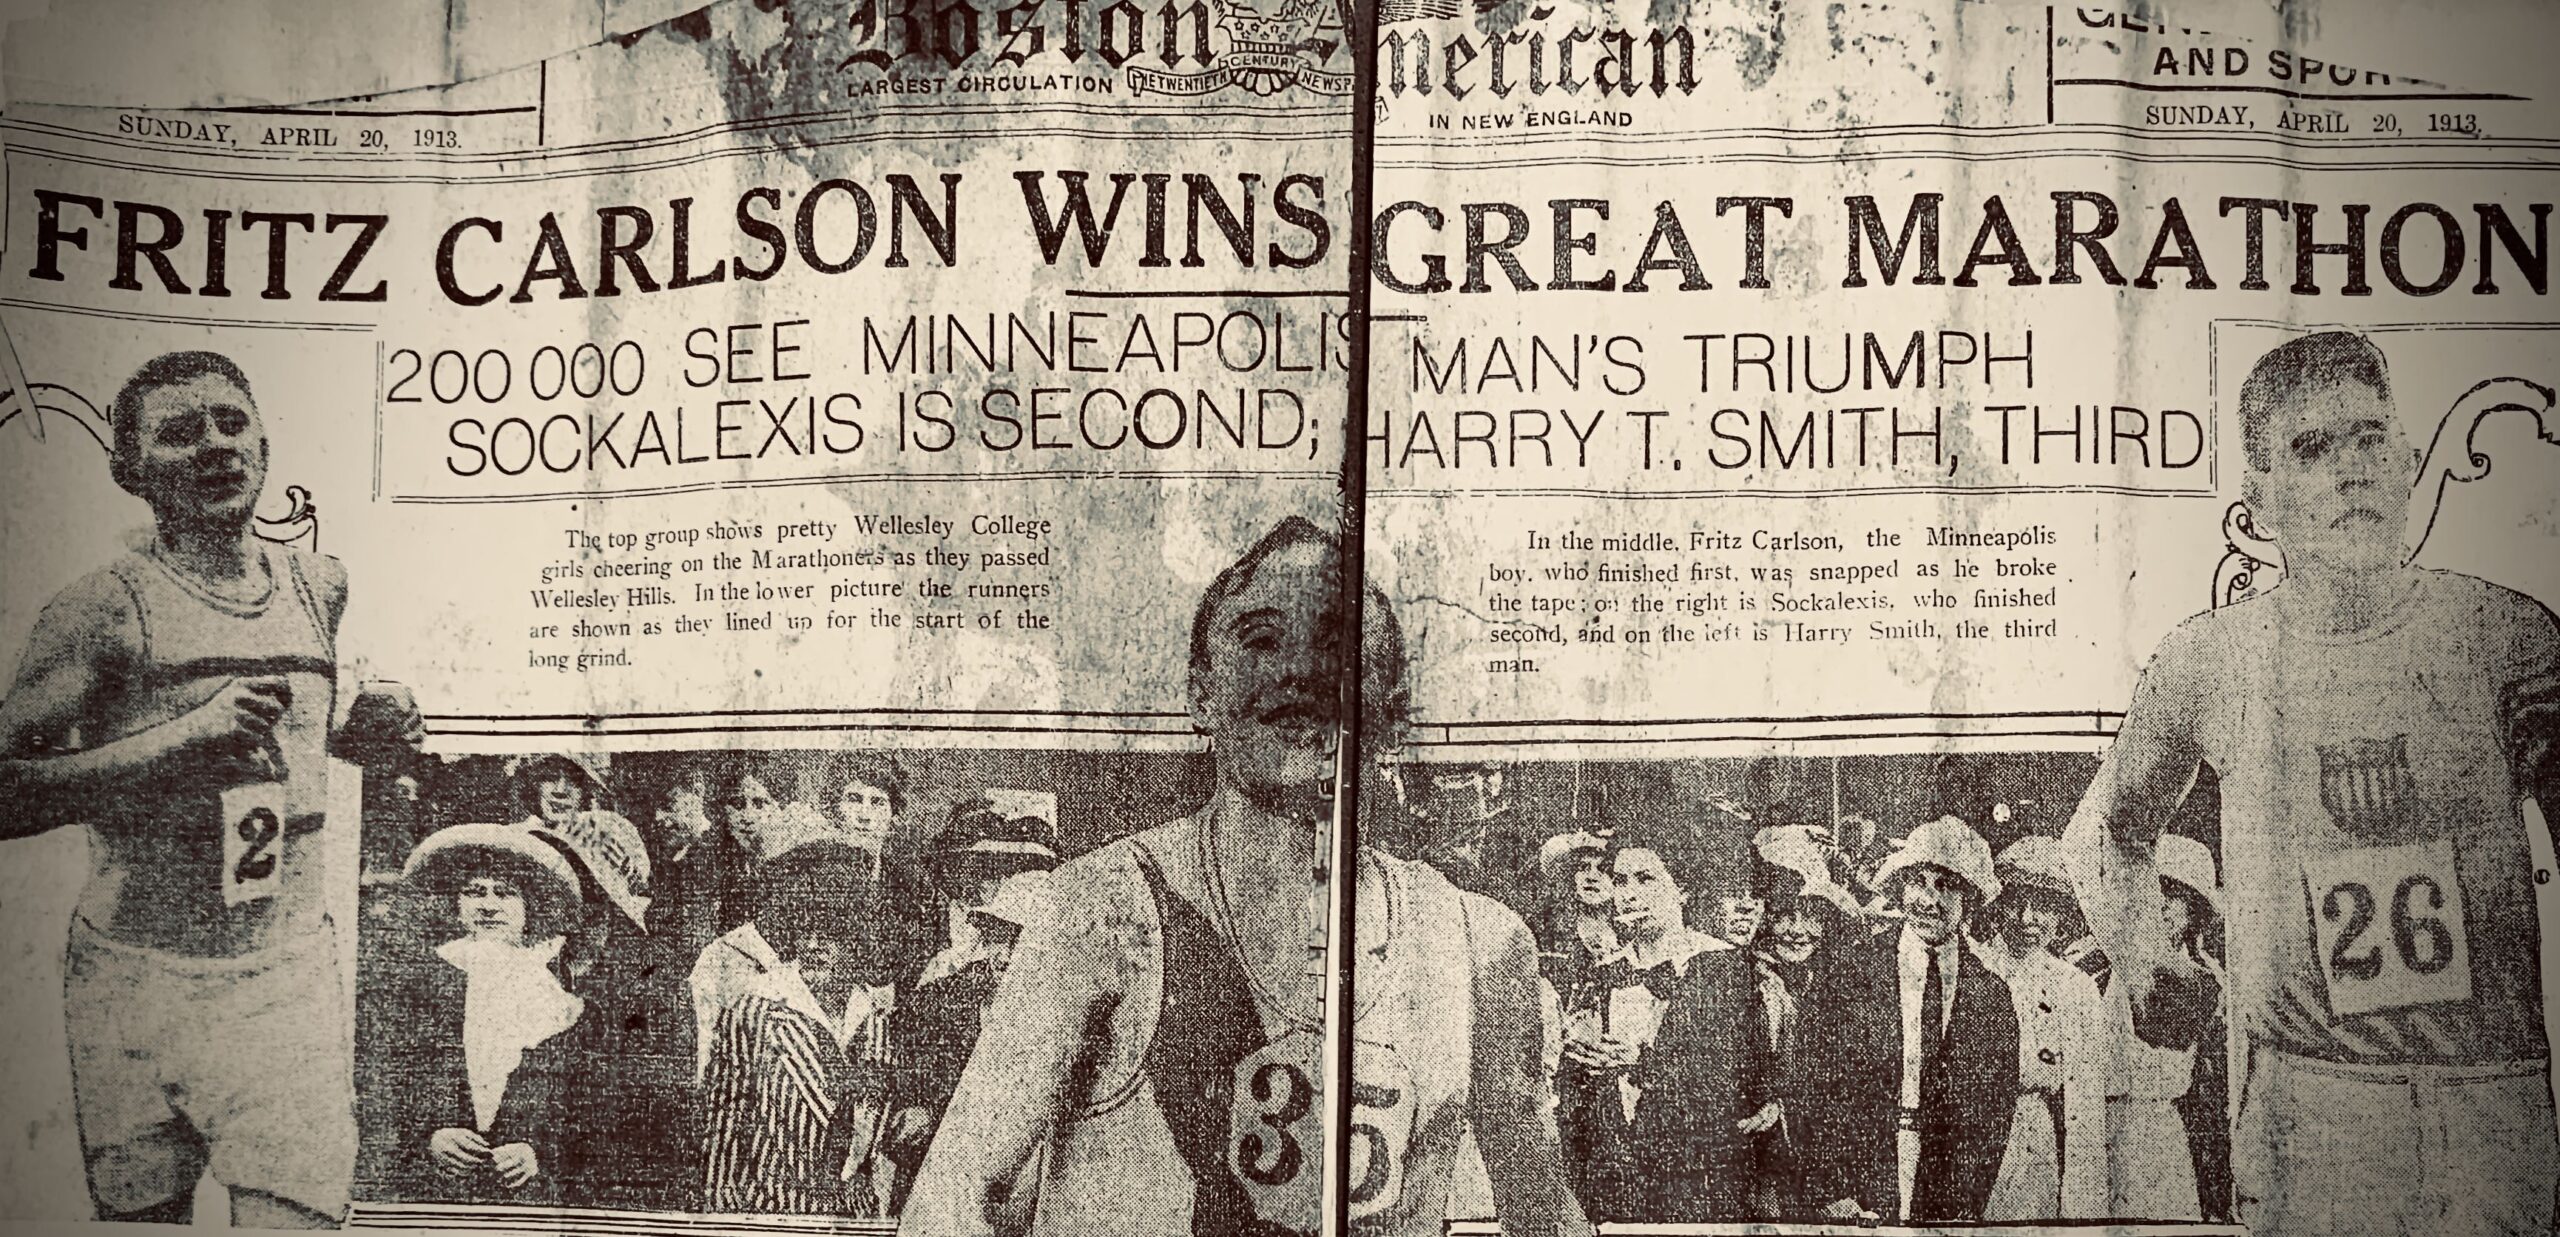 Boston American newspaper clipping of Fritz Carlson's Boston Marathon win